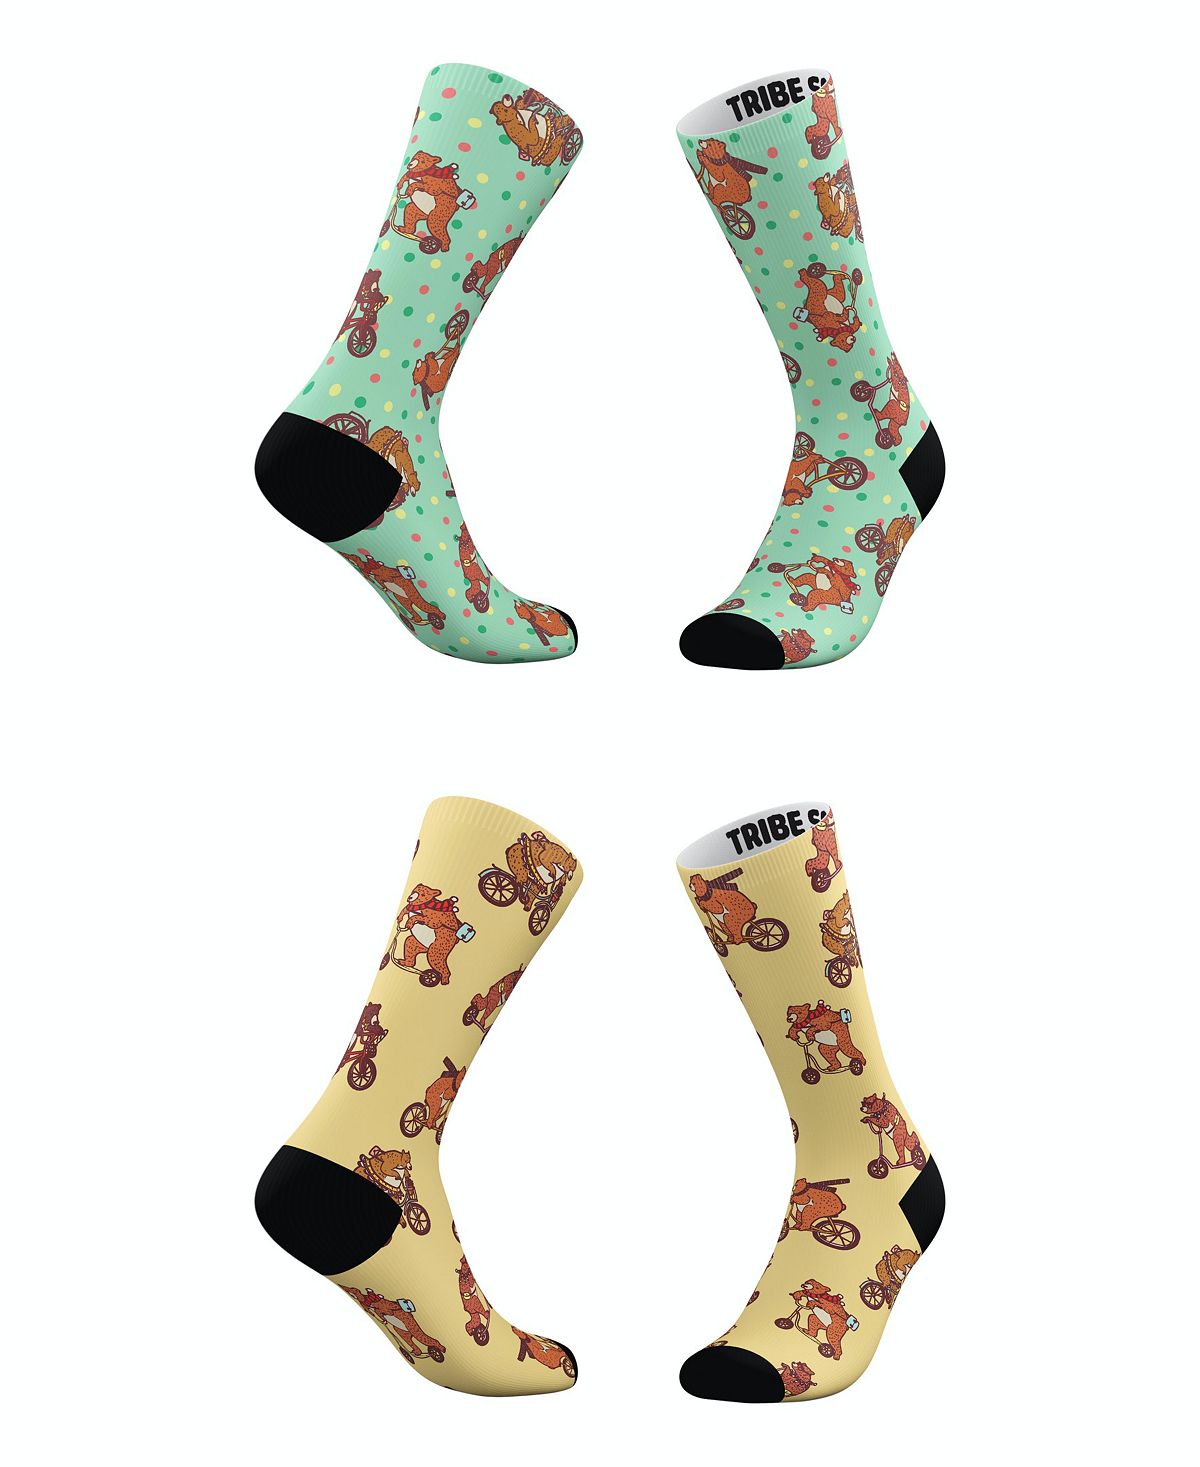 Мужские и женские носки Hipster Bears, набор из 2 штук Tribe Socks oshtraco 5a 13a 15a assorted fuse pack